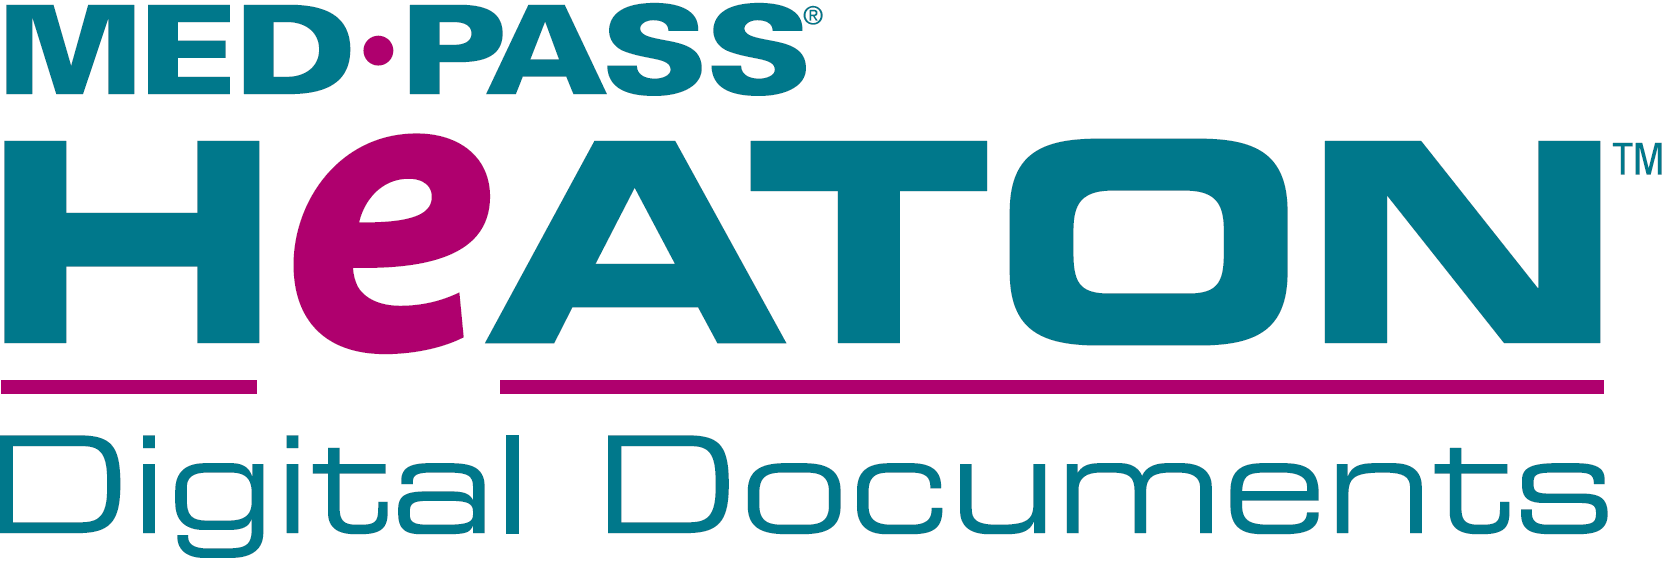 MED-PASS Digital Documents logo